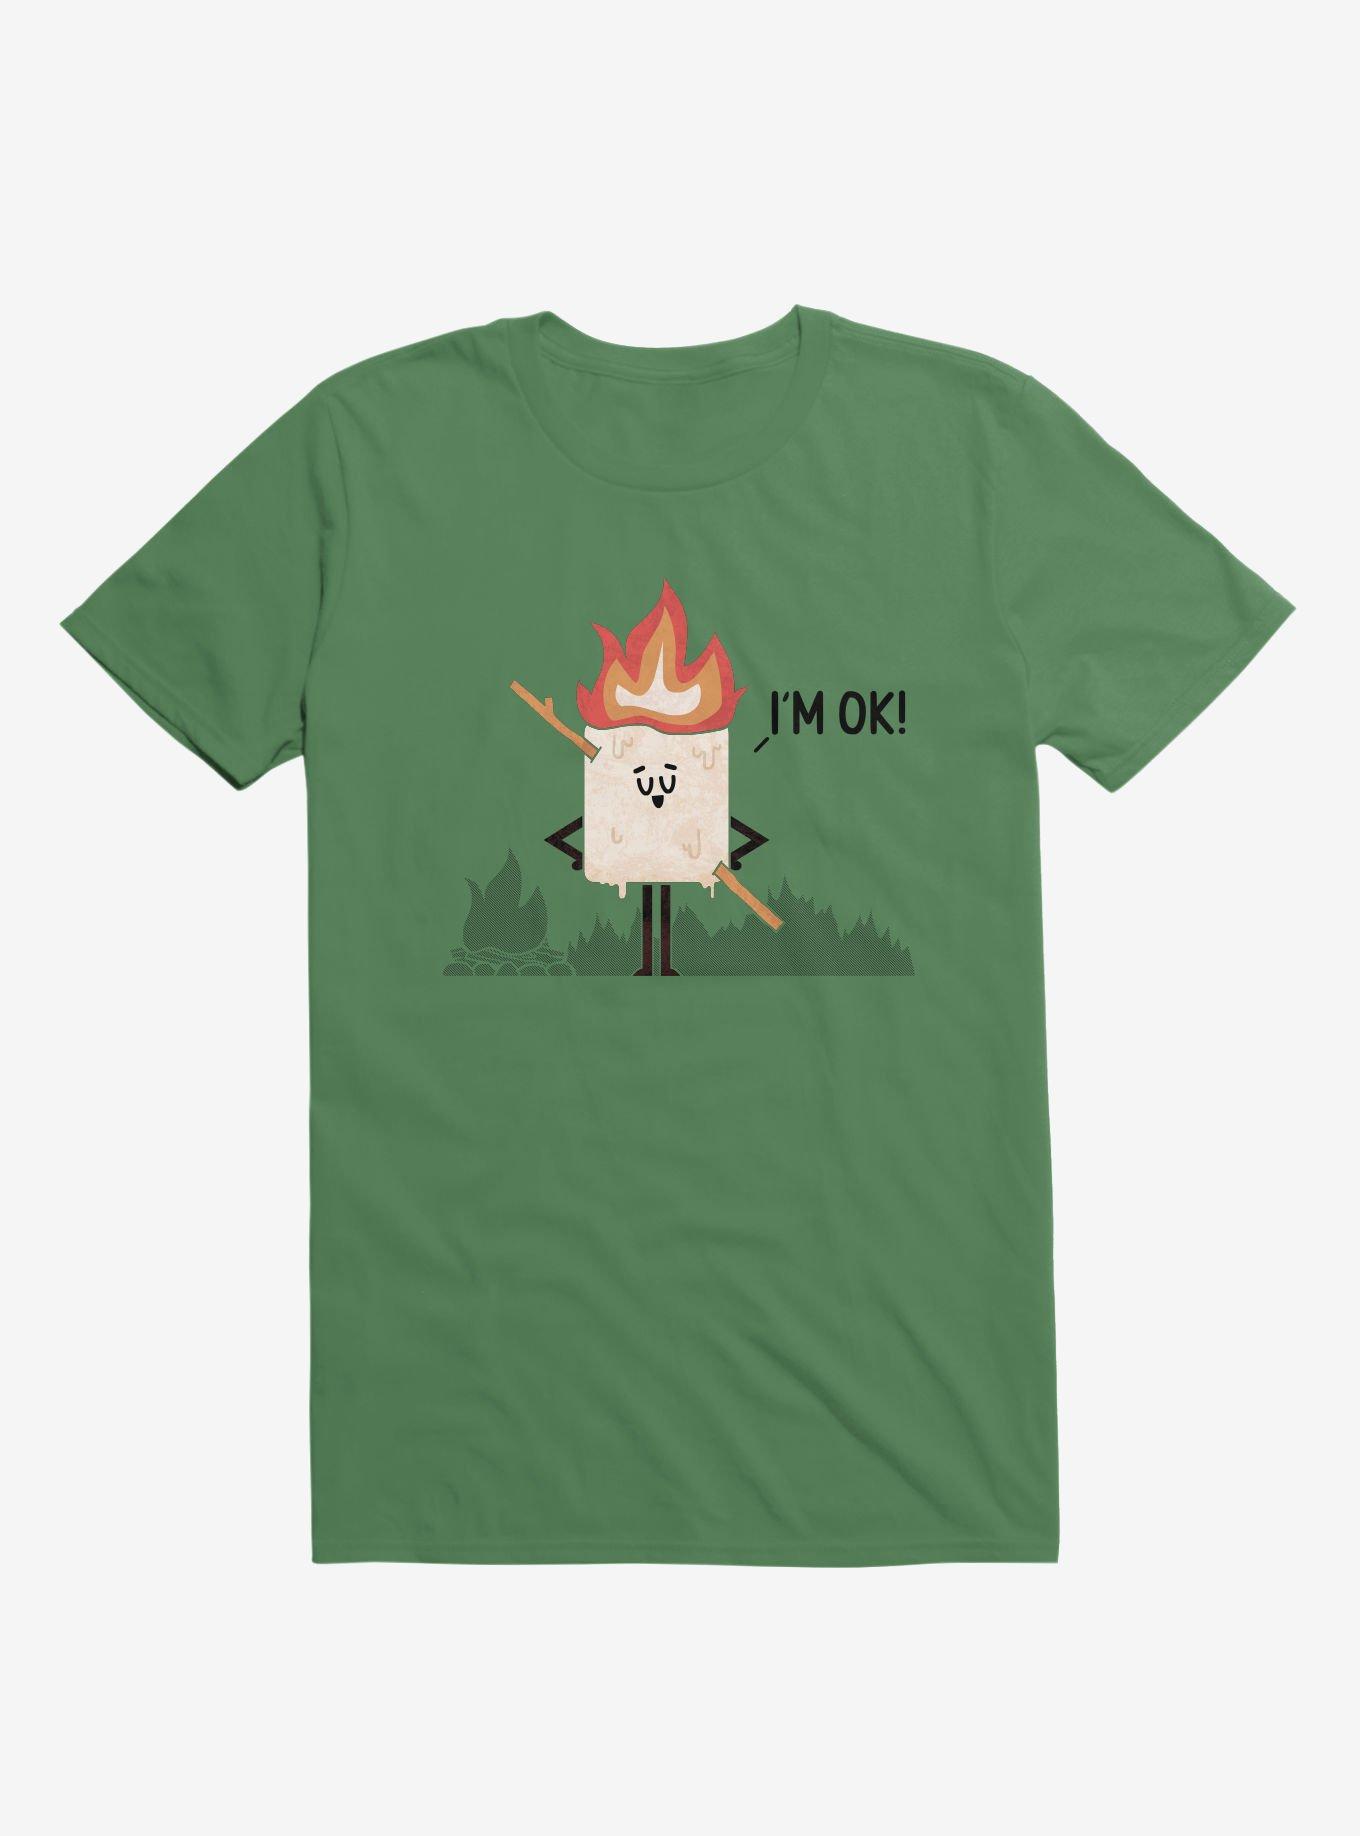 I'm OK! Campfire S'more Irish Green T-Shirt